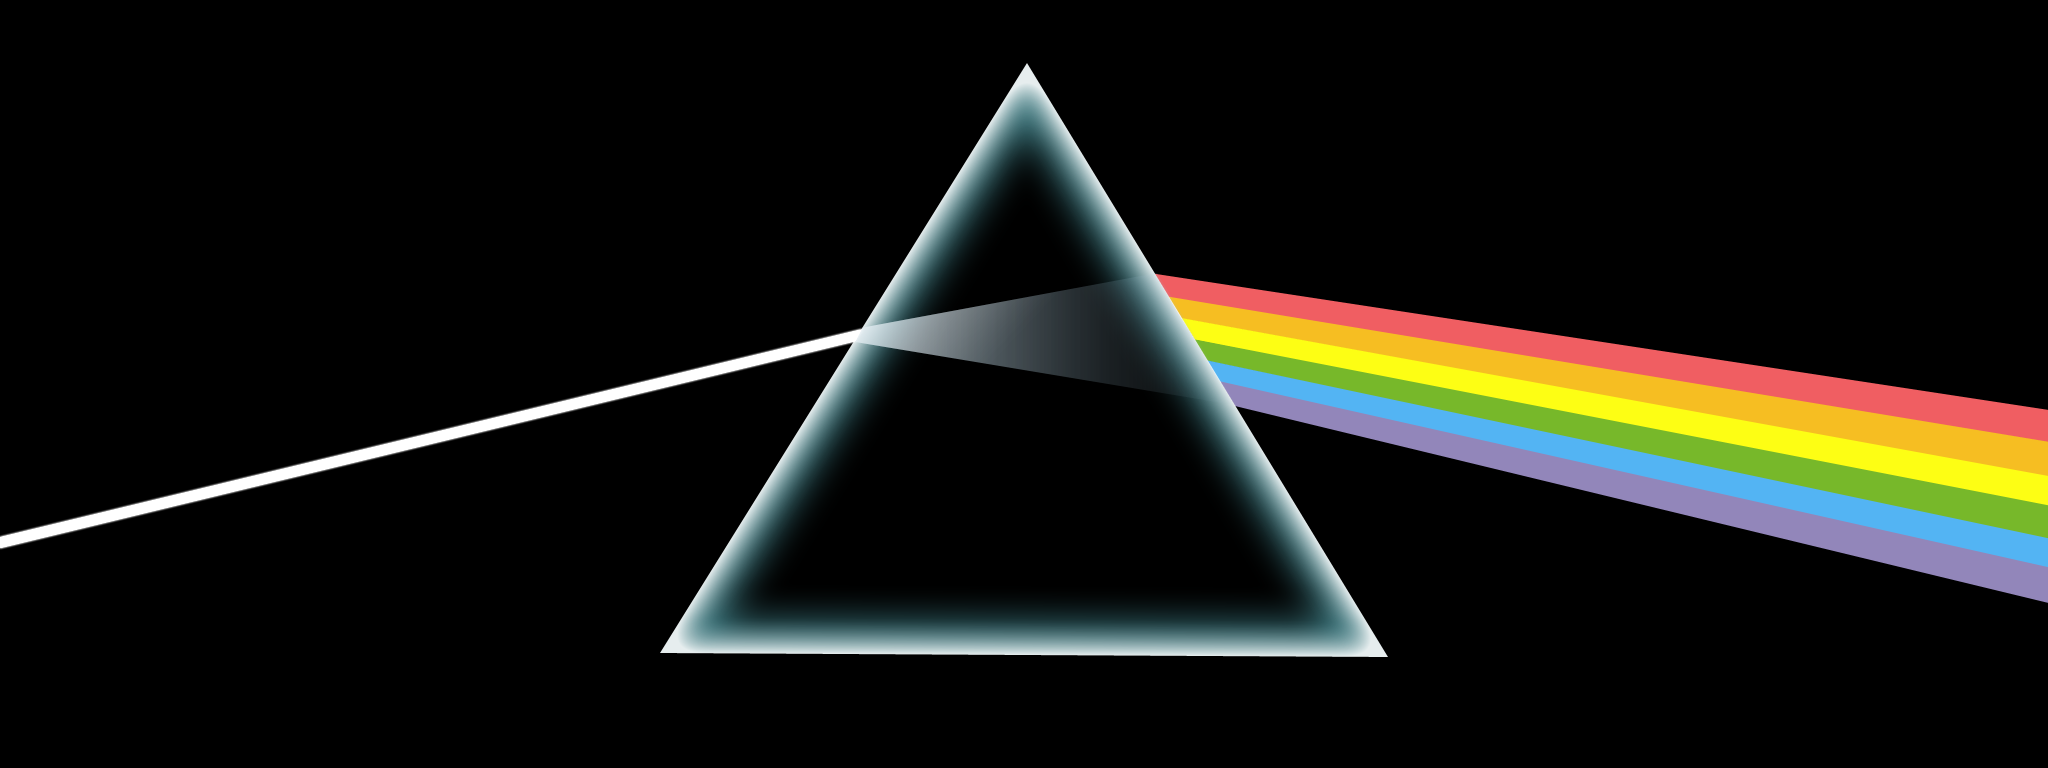 Pink Floyd Wallpaper HD Base